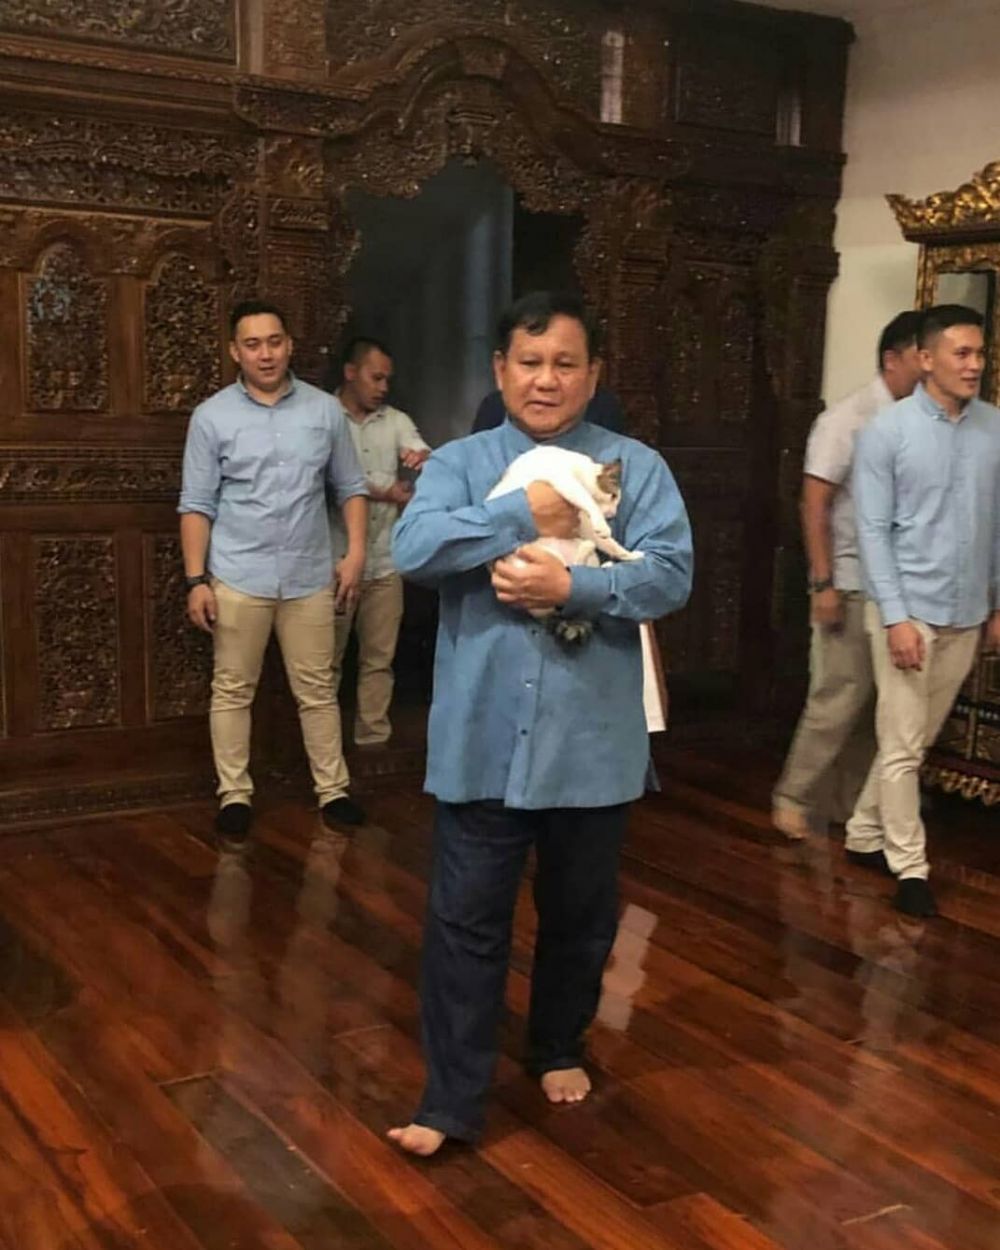 7 Momen Prabowo main bareng kucing kesayangannya